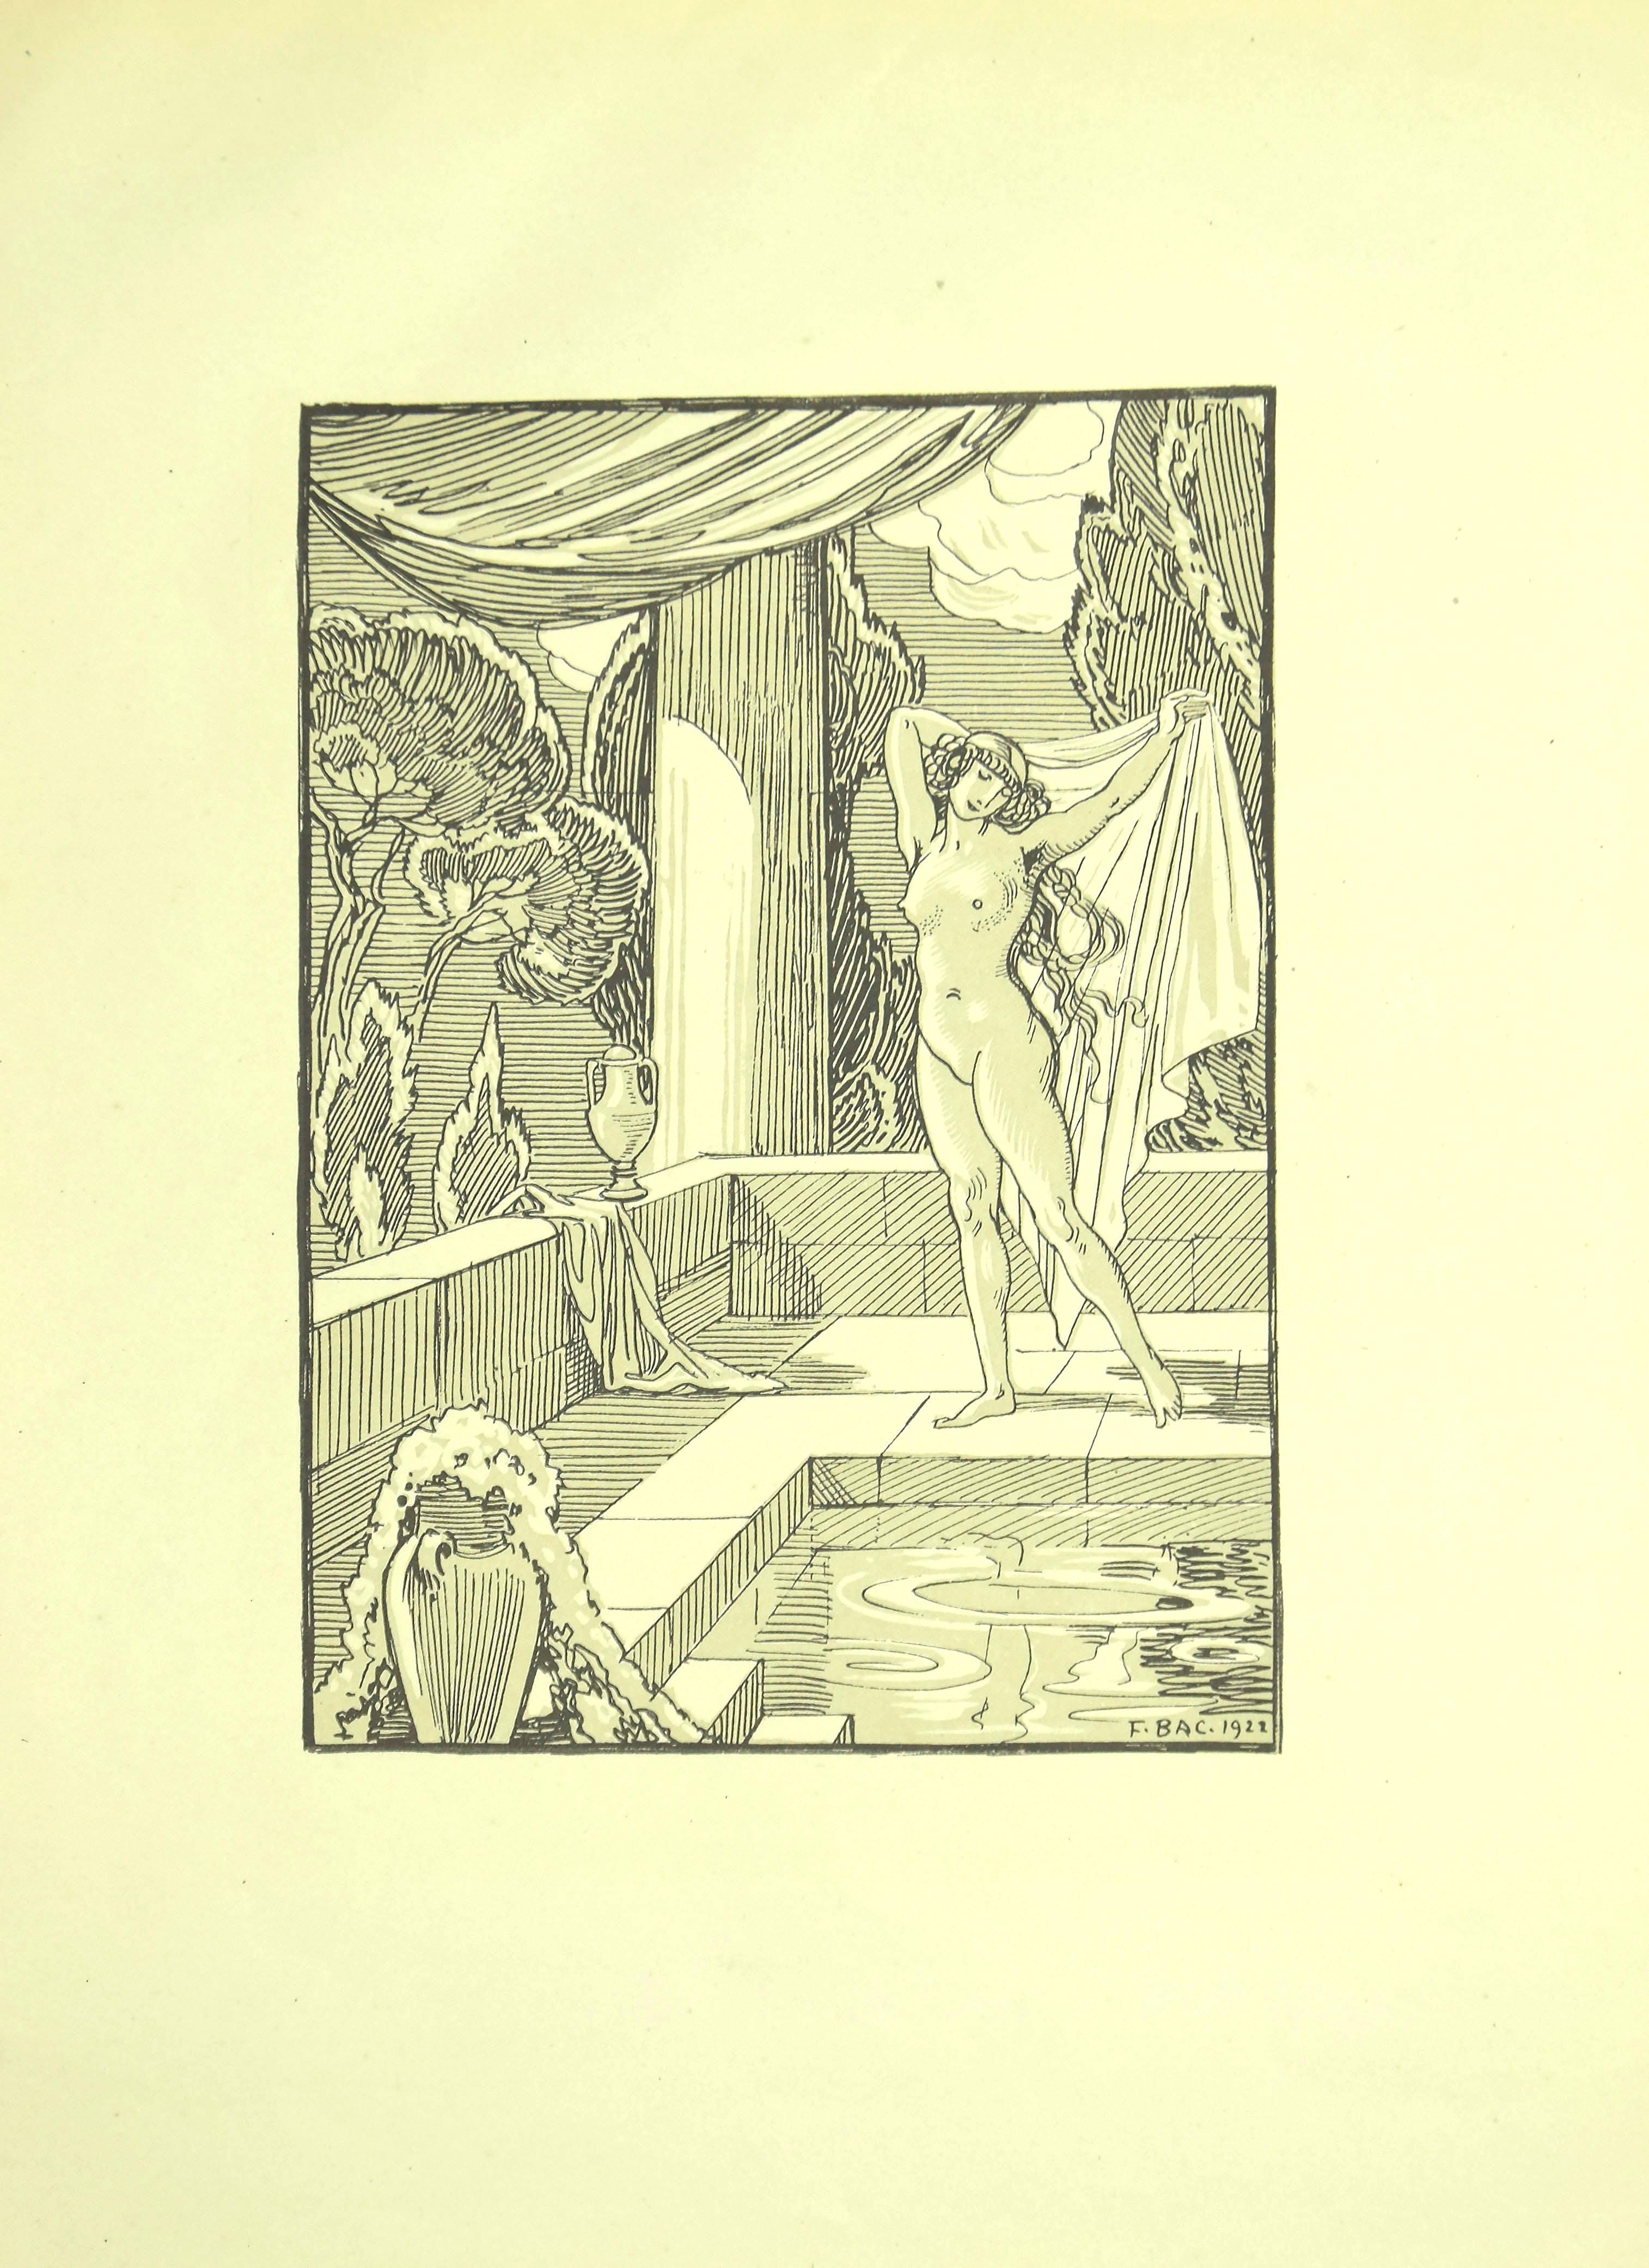 Ferdinand Bac Figurative Print - The Bath of Venus - Original Lithograph by F. Bac - 1922